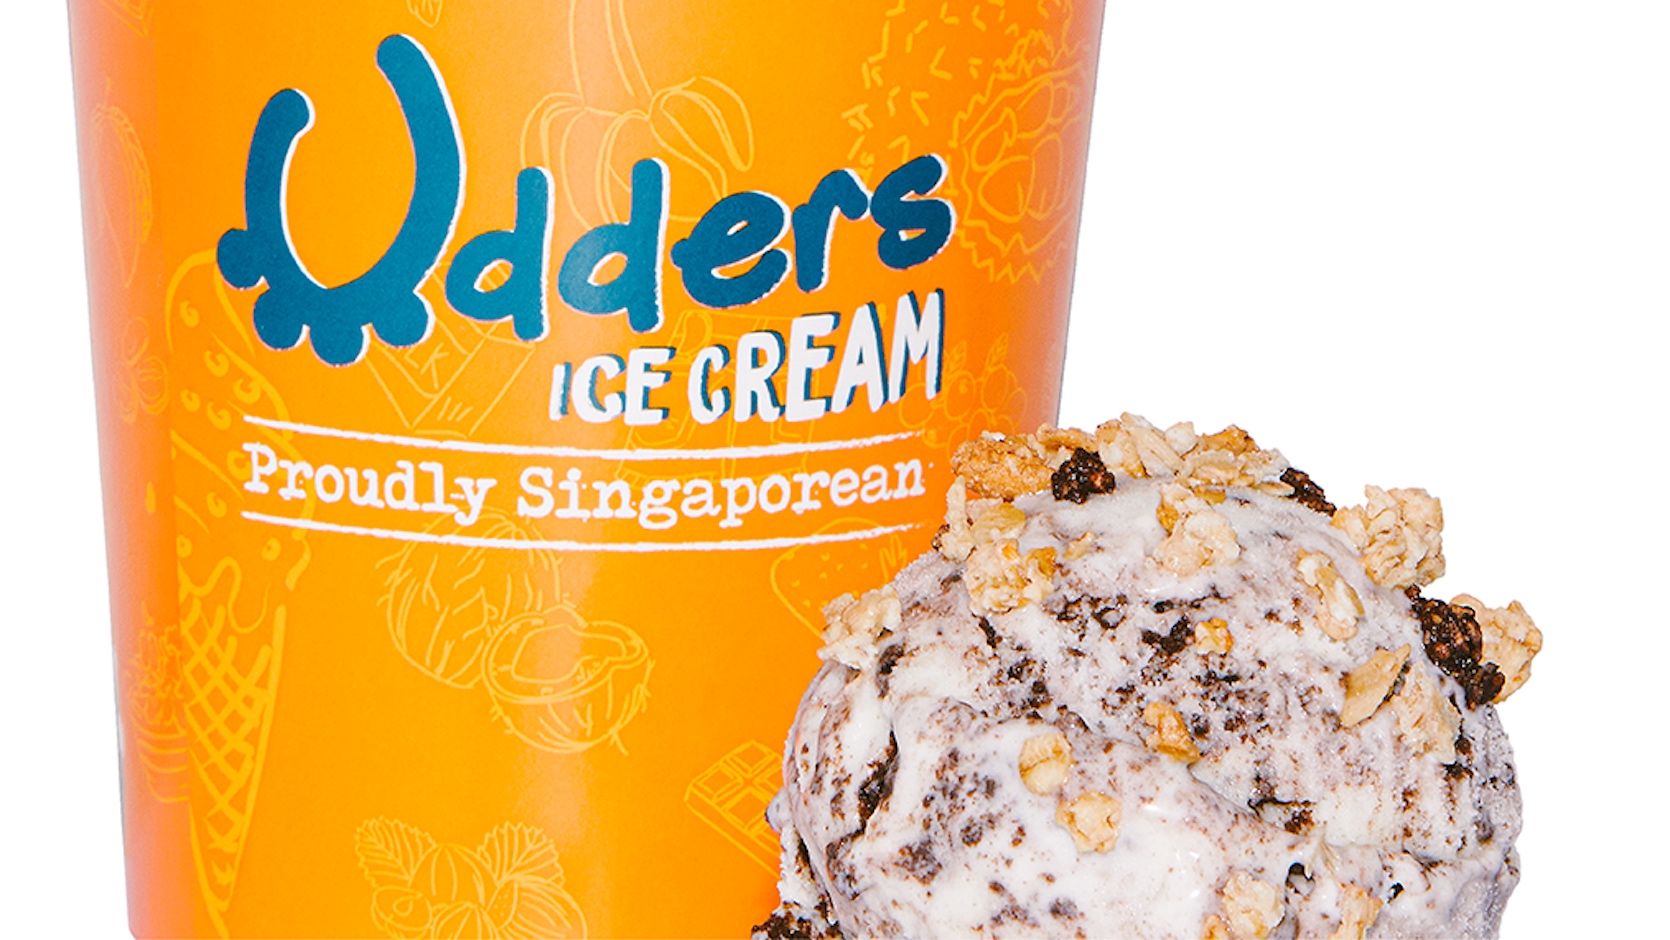 Udders Ice Cream Visit Singapore Official Site